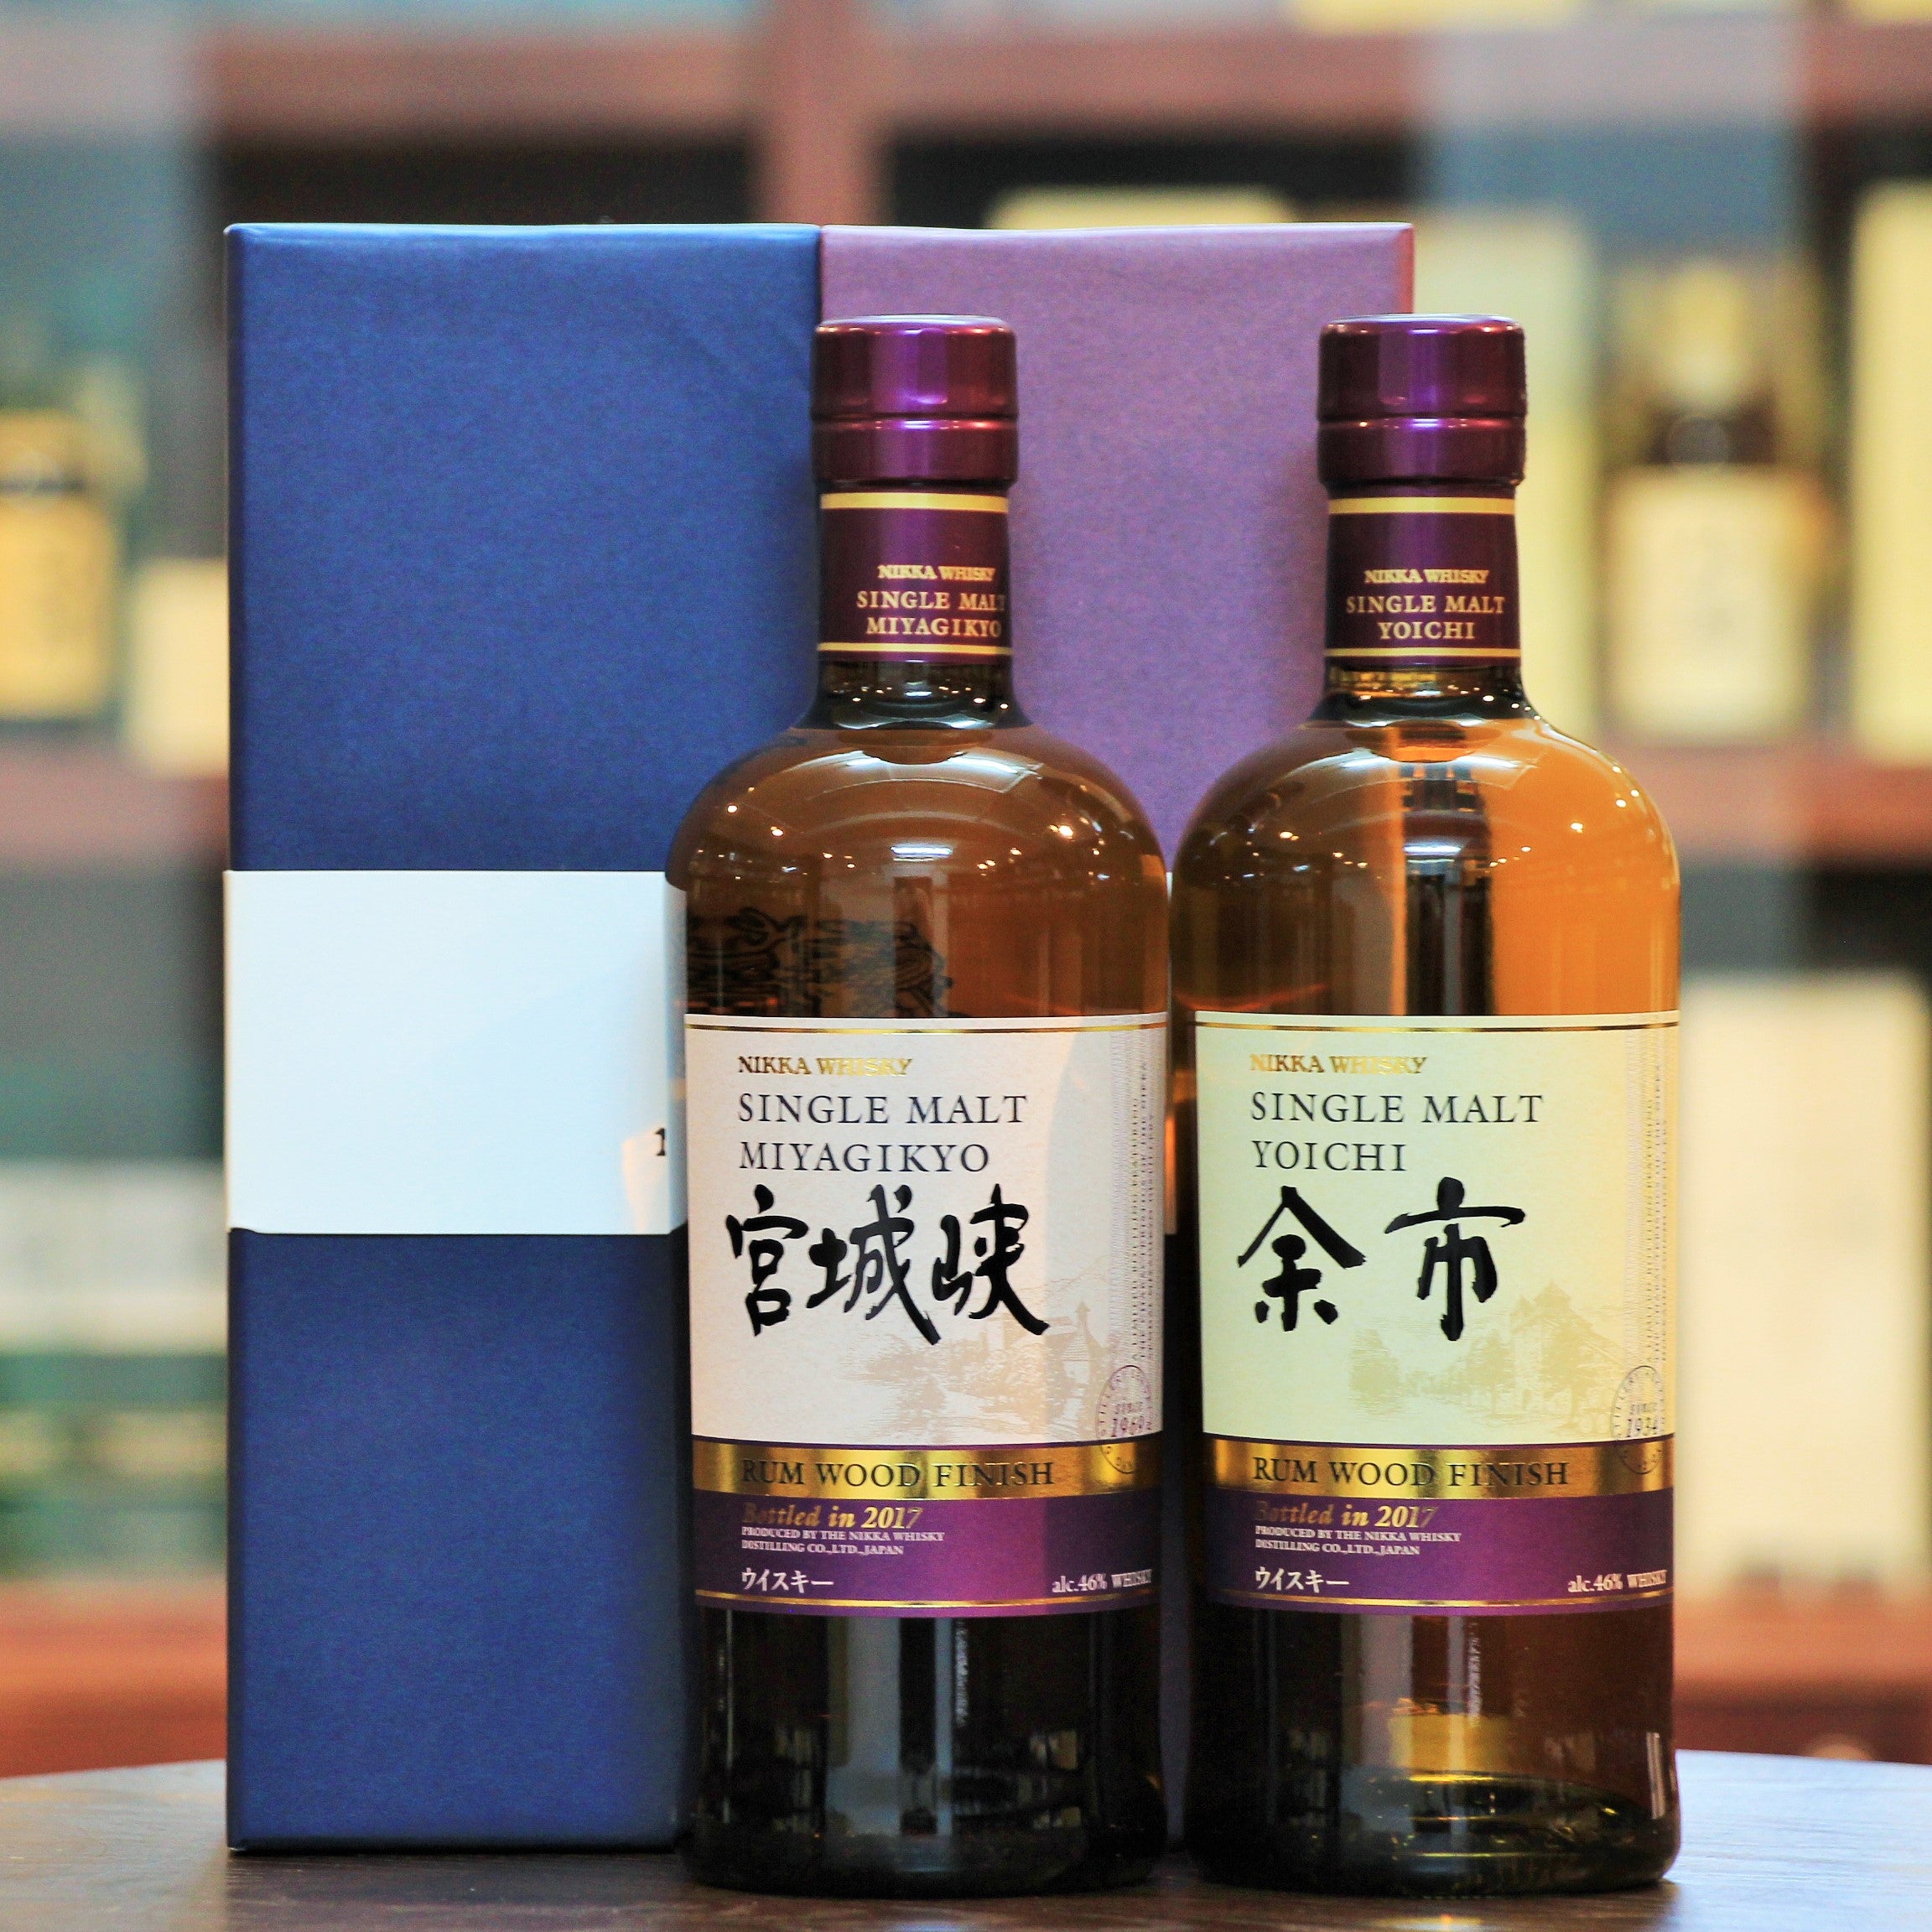 Yoichi and Miyagikyo Japanese Single Malt Whisky Rum Wood Finish Set Mizunara The Shop HK